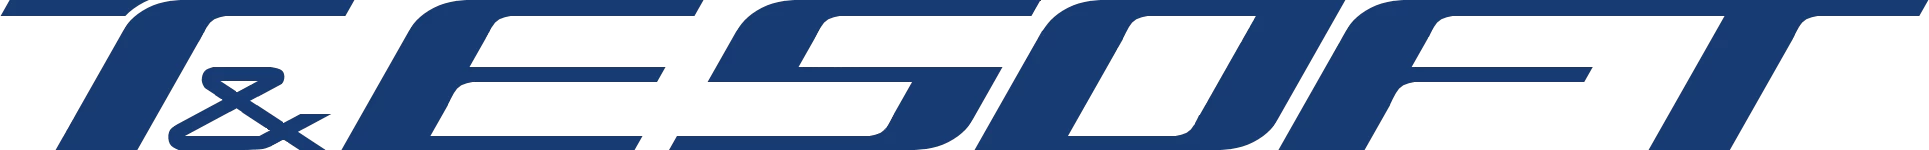 T&E Soft logo